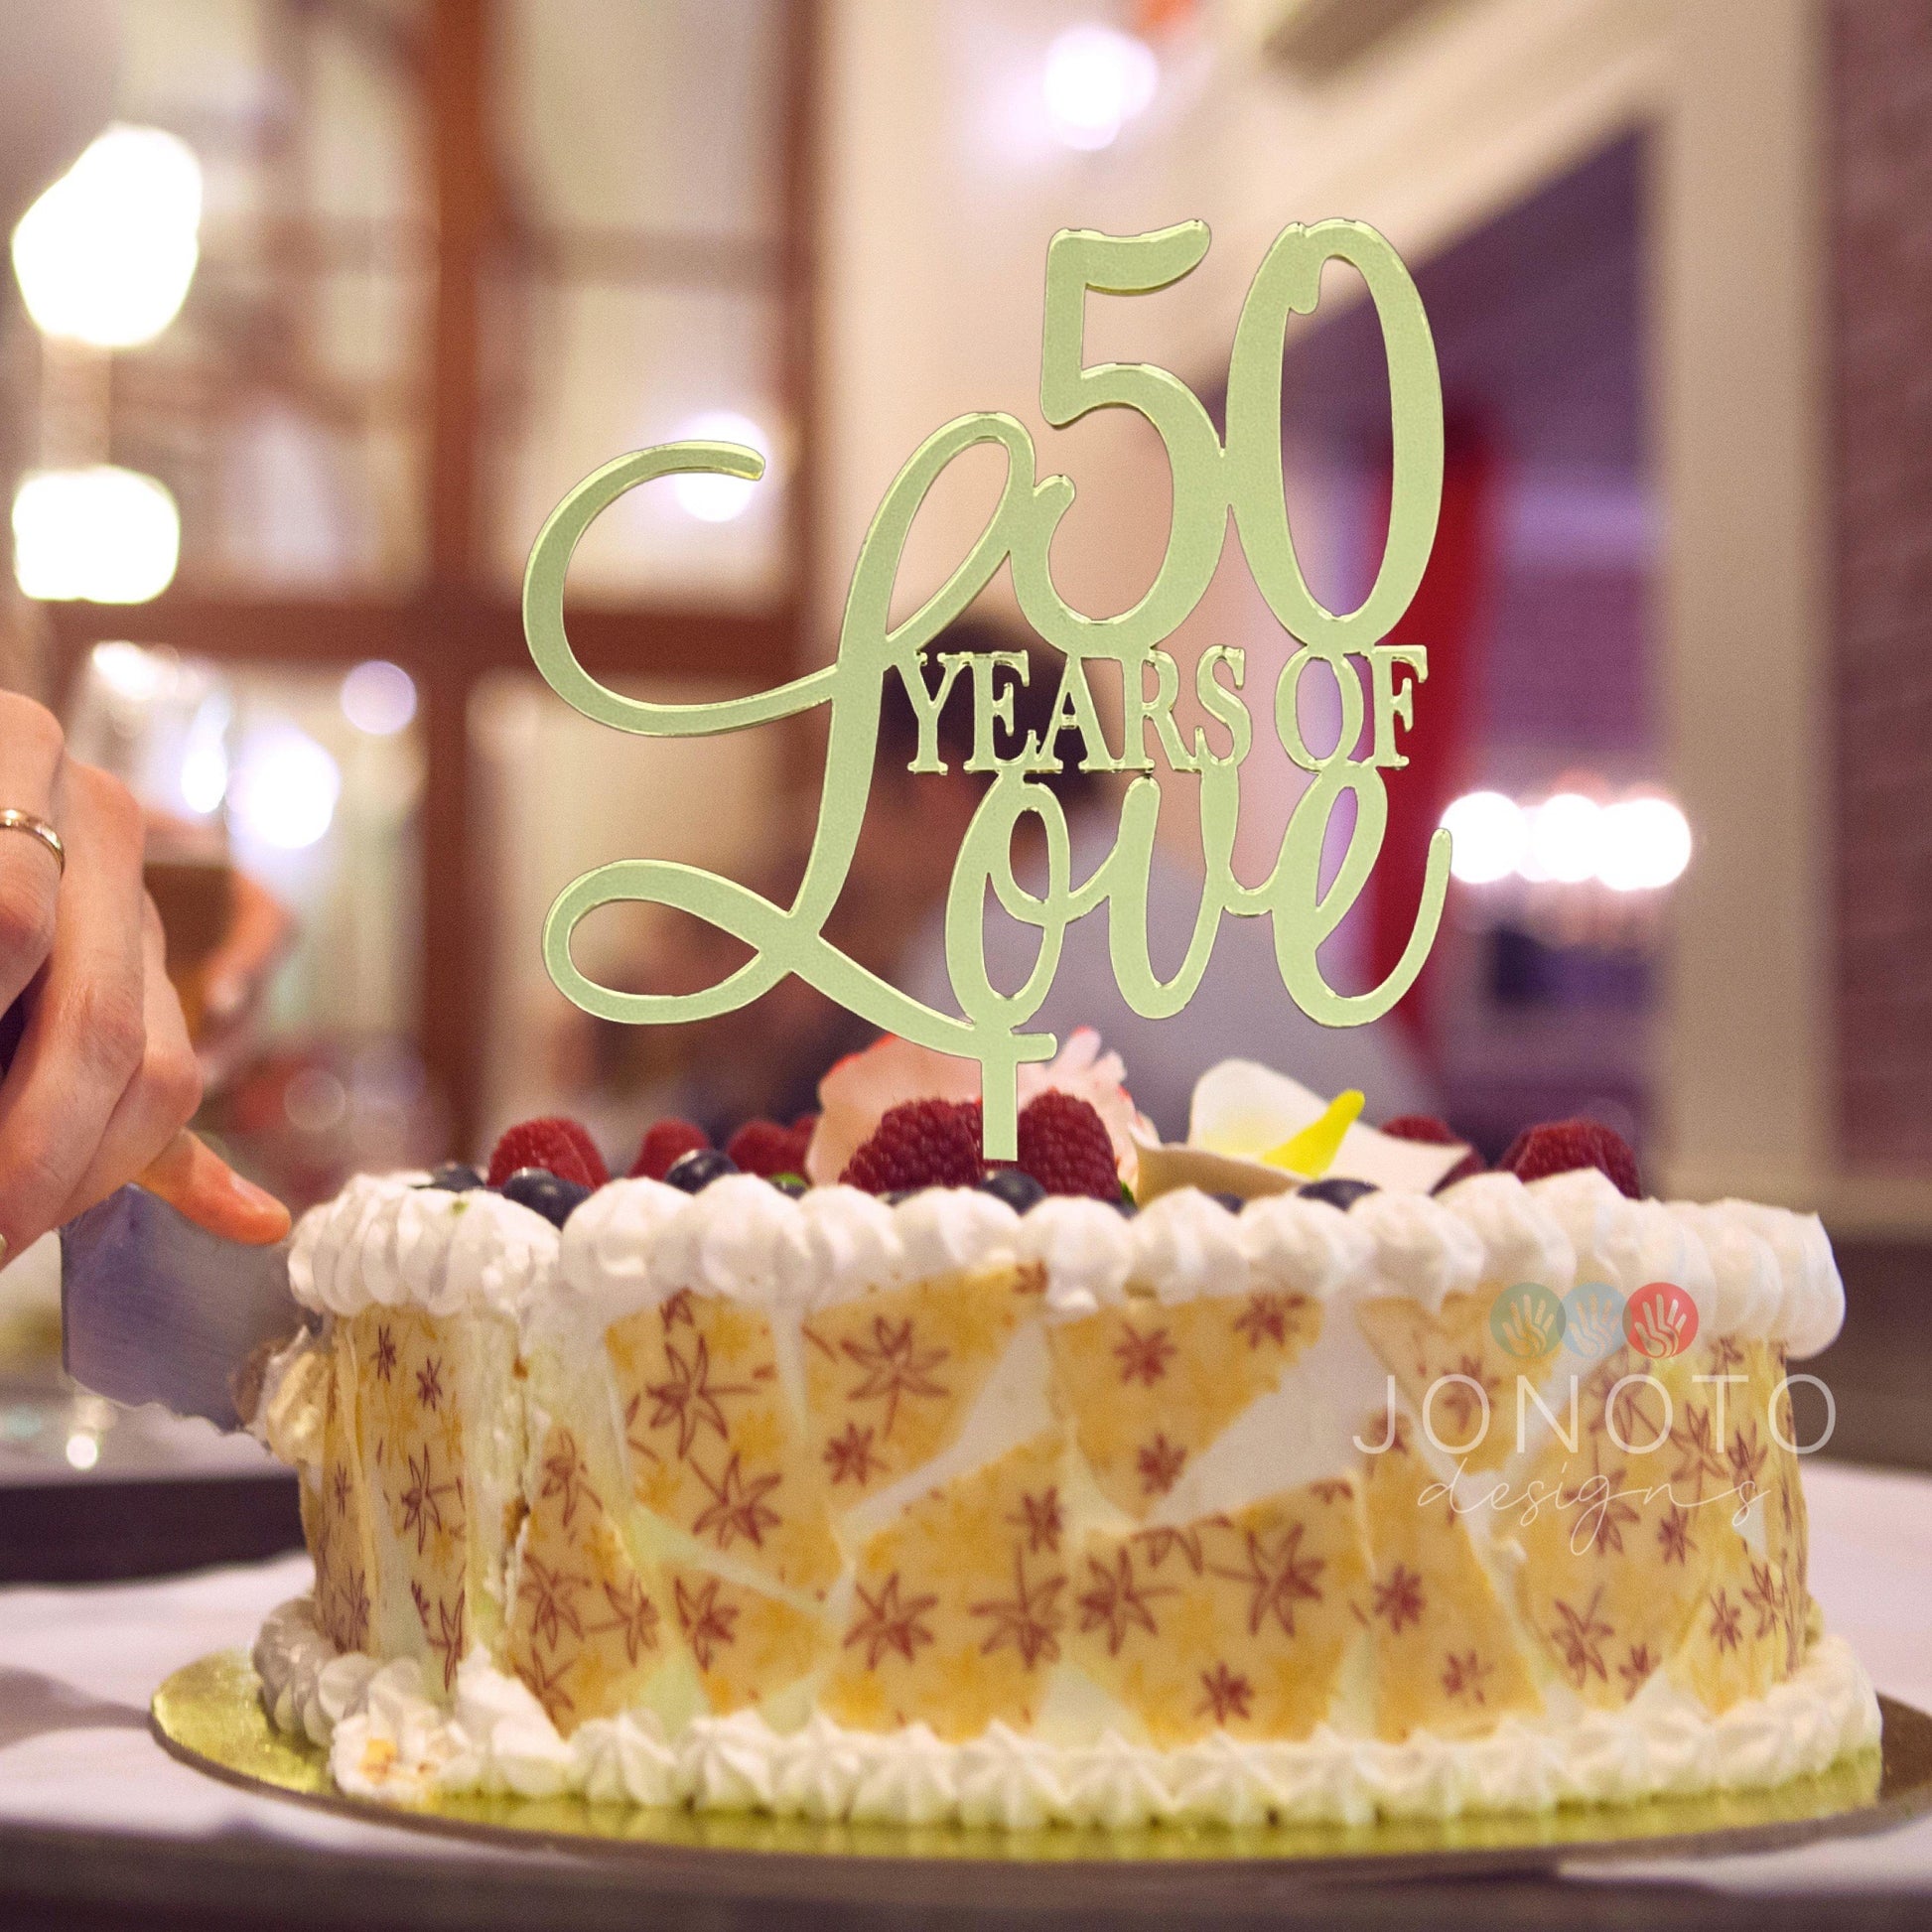 Gold 50th wedding anniversary cake topper